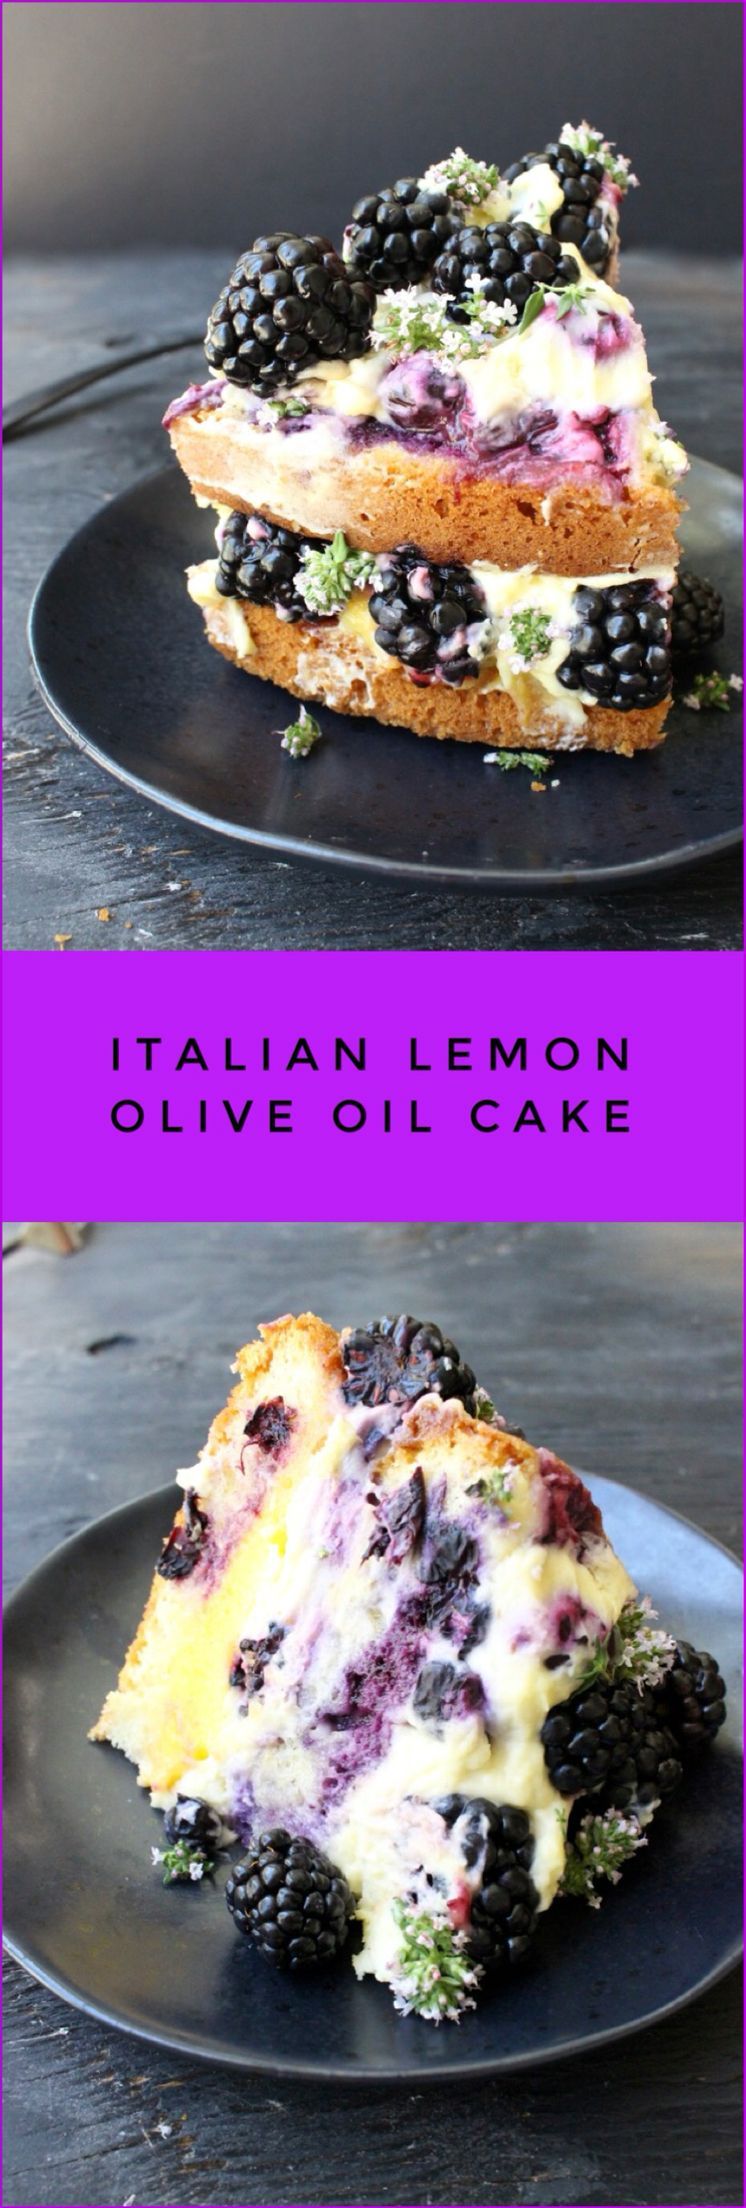 Italian Lemon Olive Oil Cake with Berried Whipped Mascarpone and Lemon Curd Layers | CiaoFlorentina.com @CiaoFlorentina